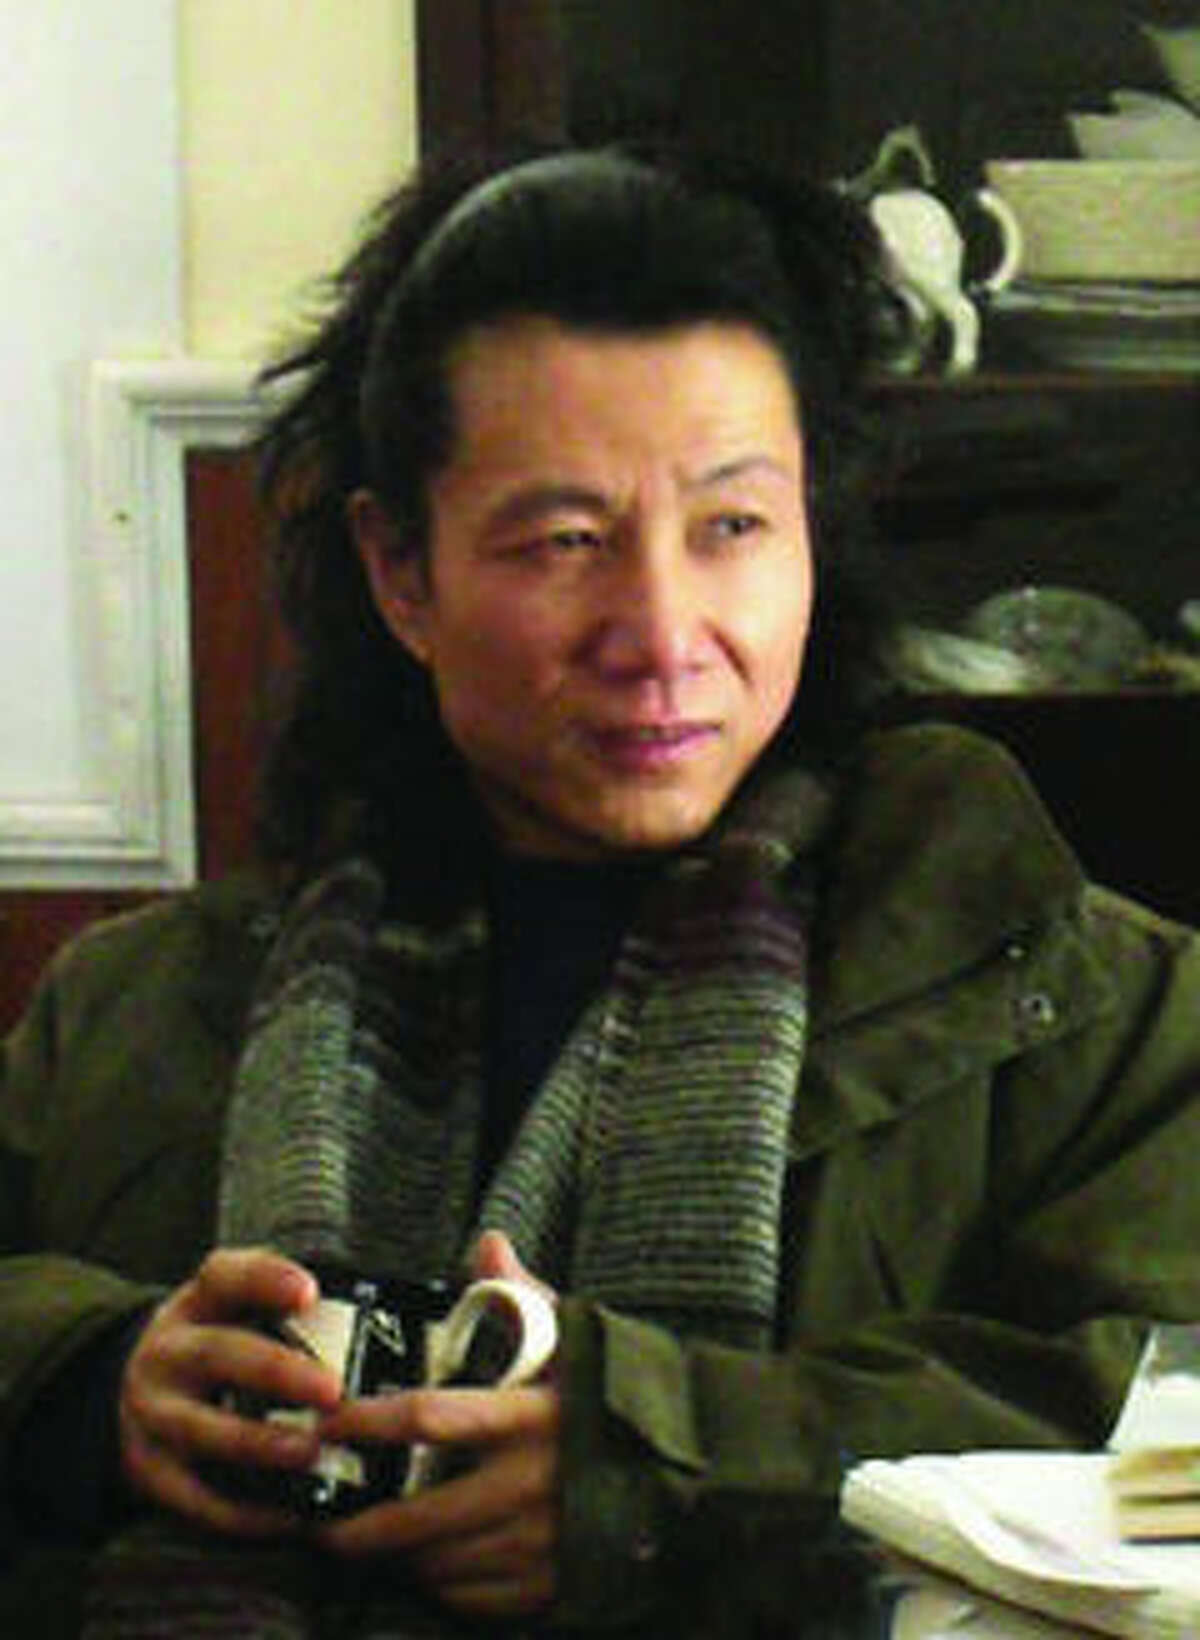 Artist Suikang Zhao